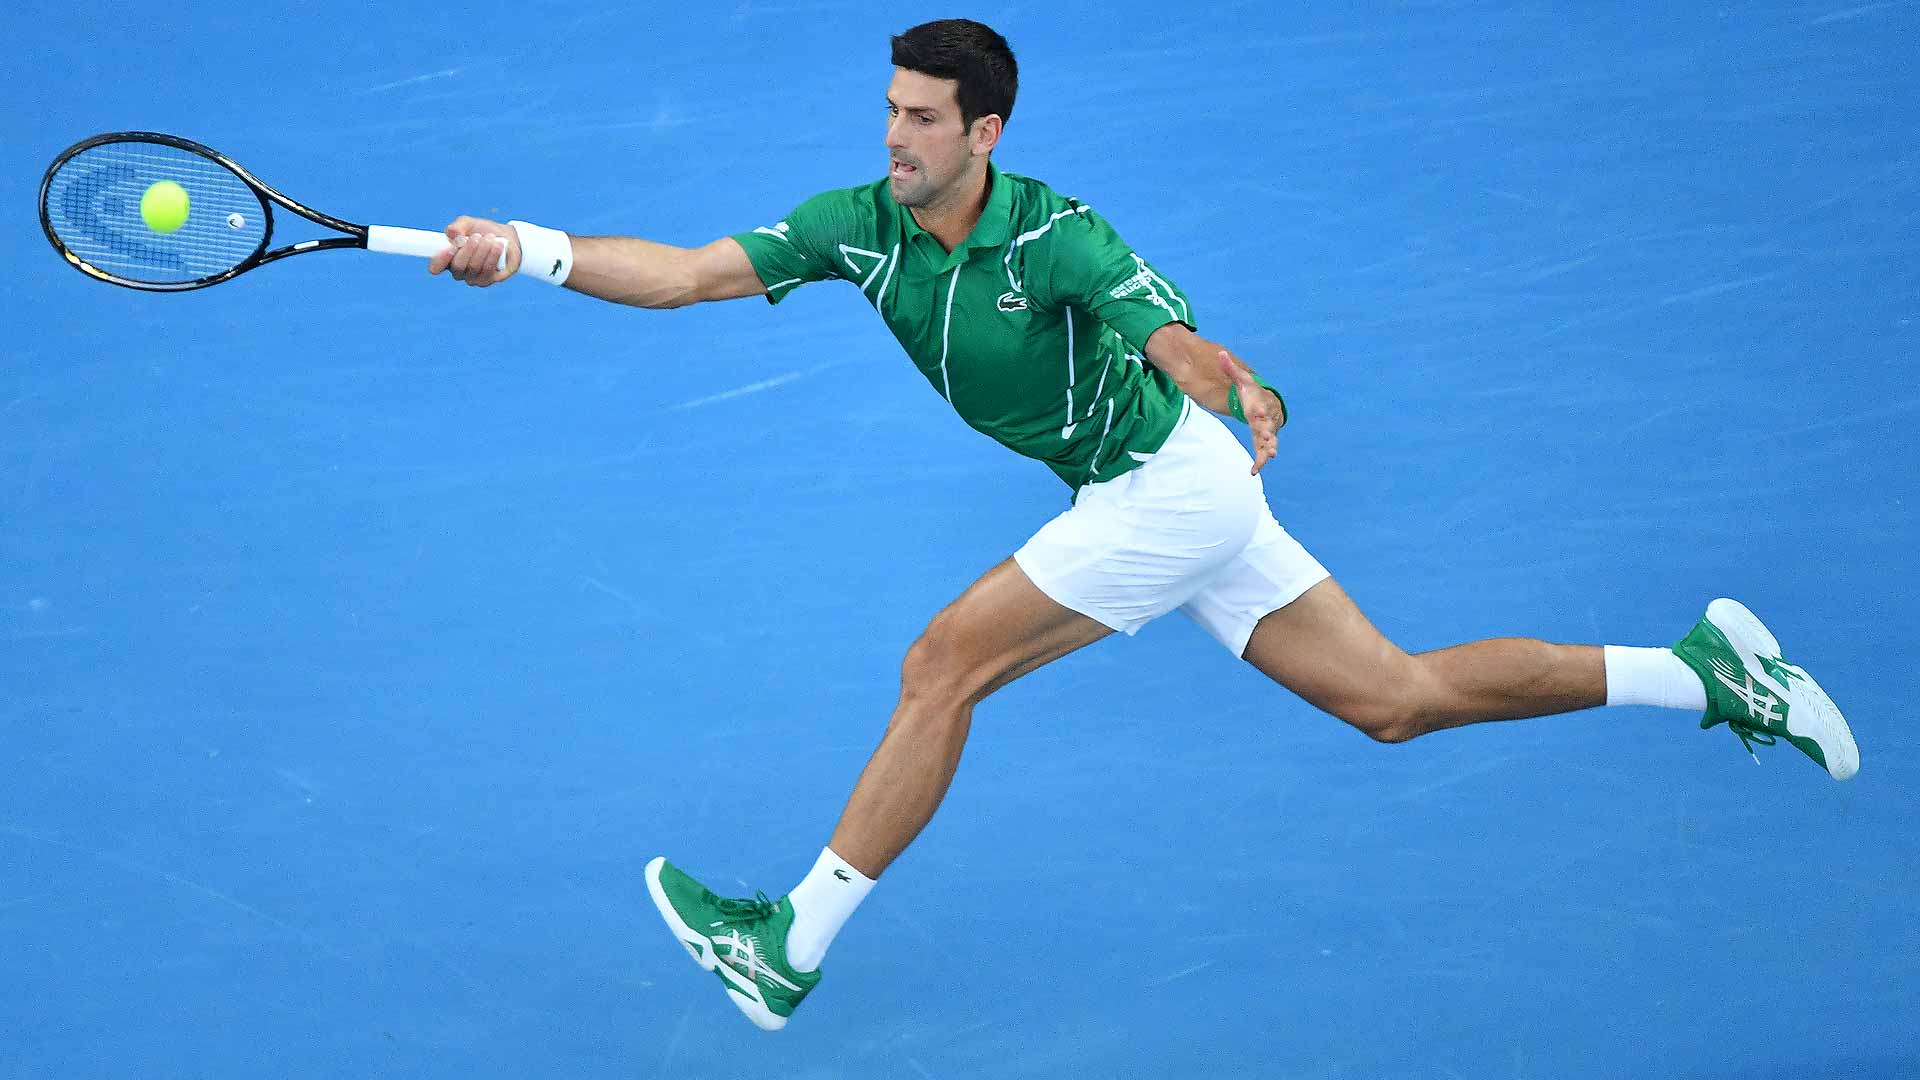 Novak Rafael Nadal To Lead Field 2021 Australian Open | ATP Tour | Tennis